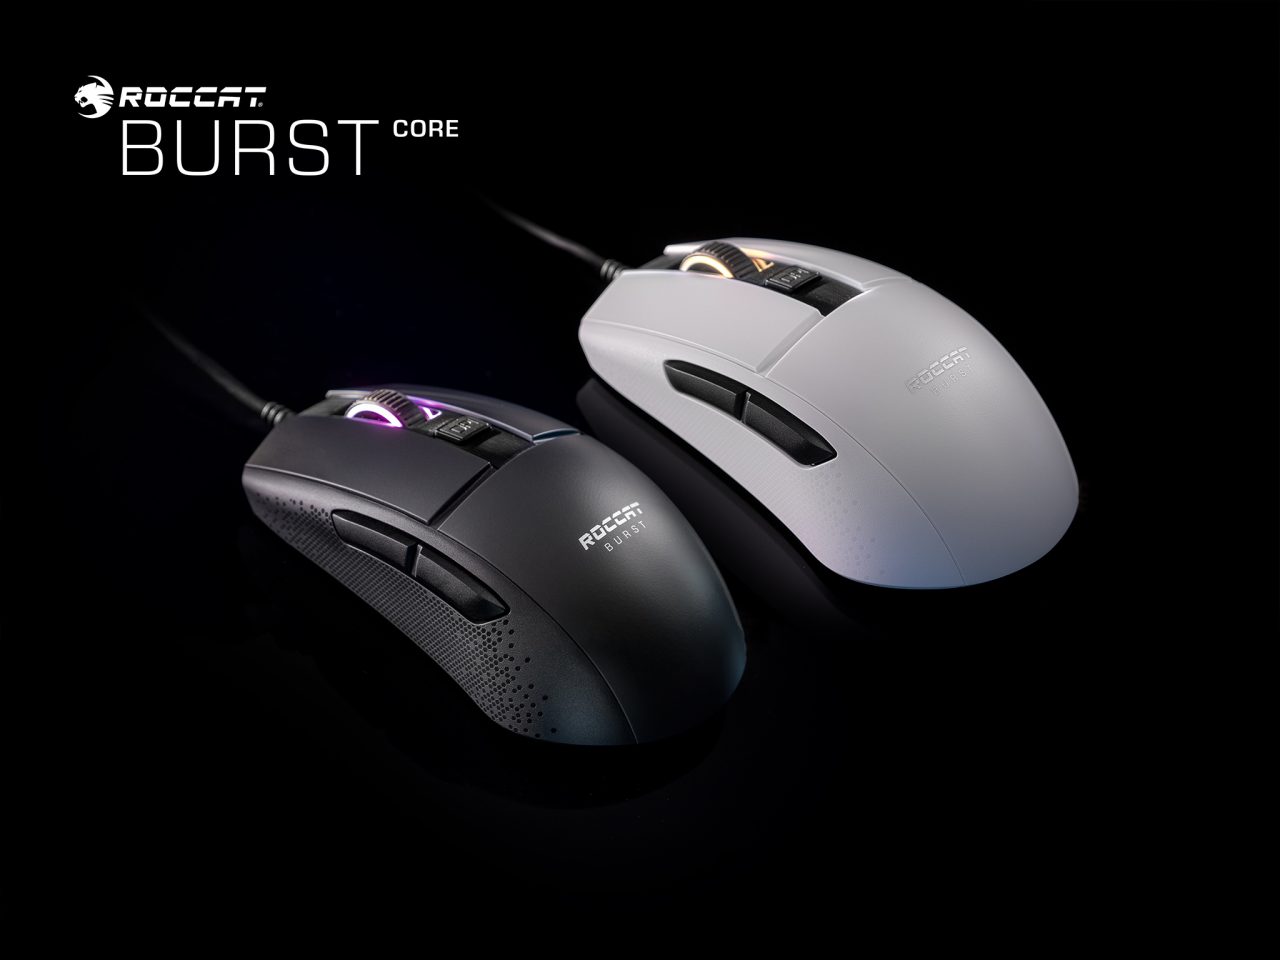 Burst Core Gaming Mouse (ROCCAT)